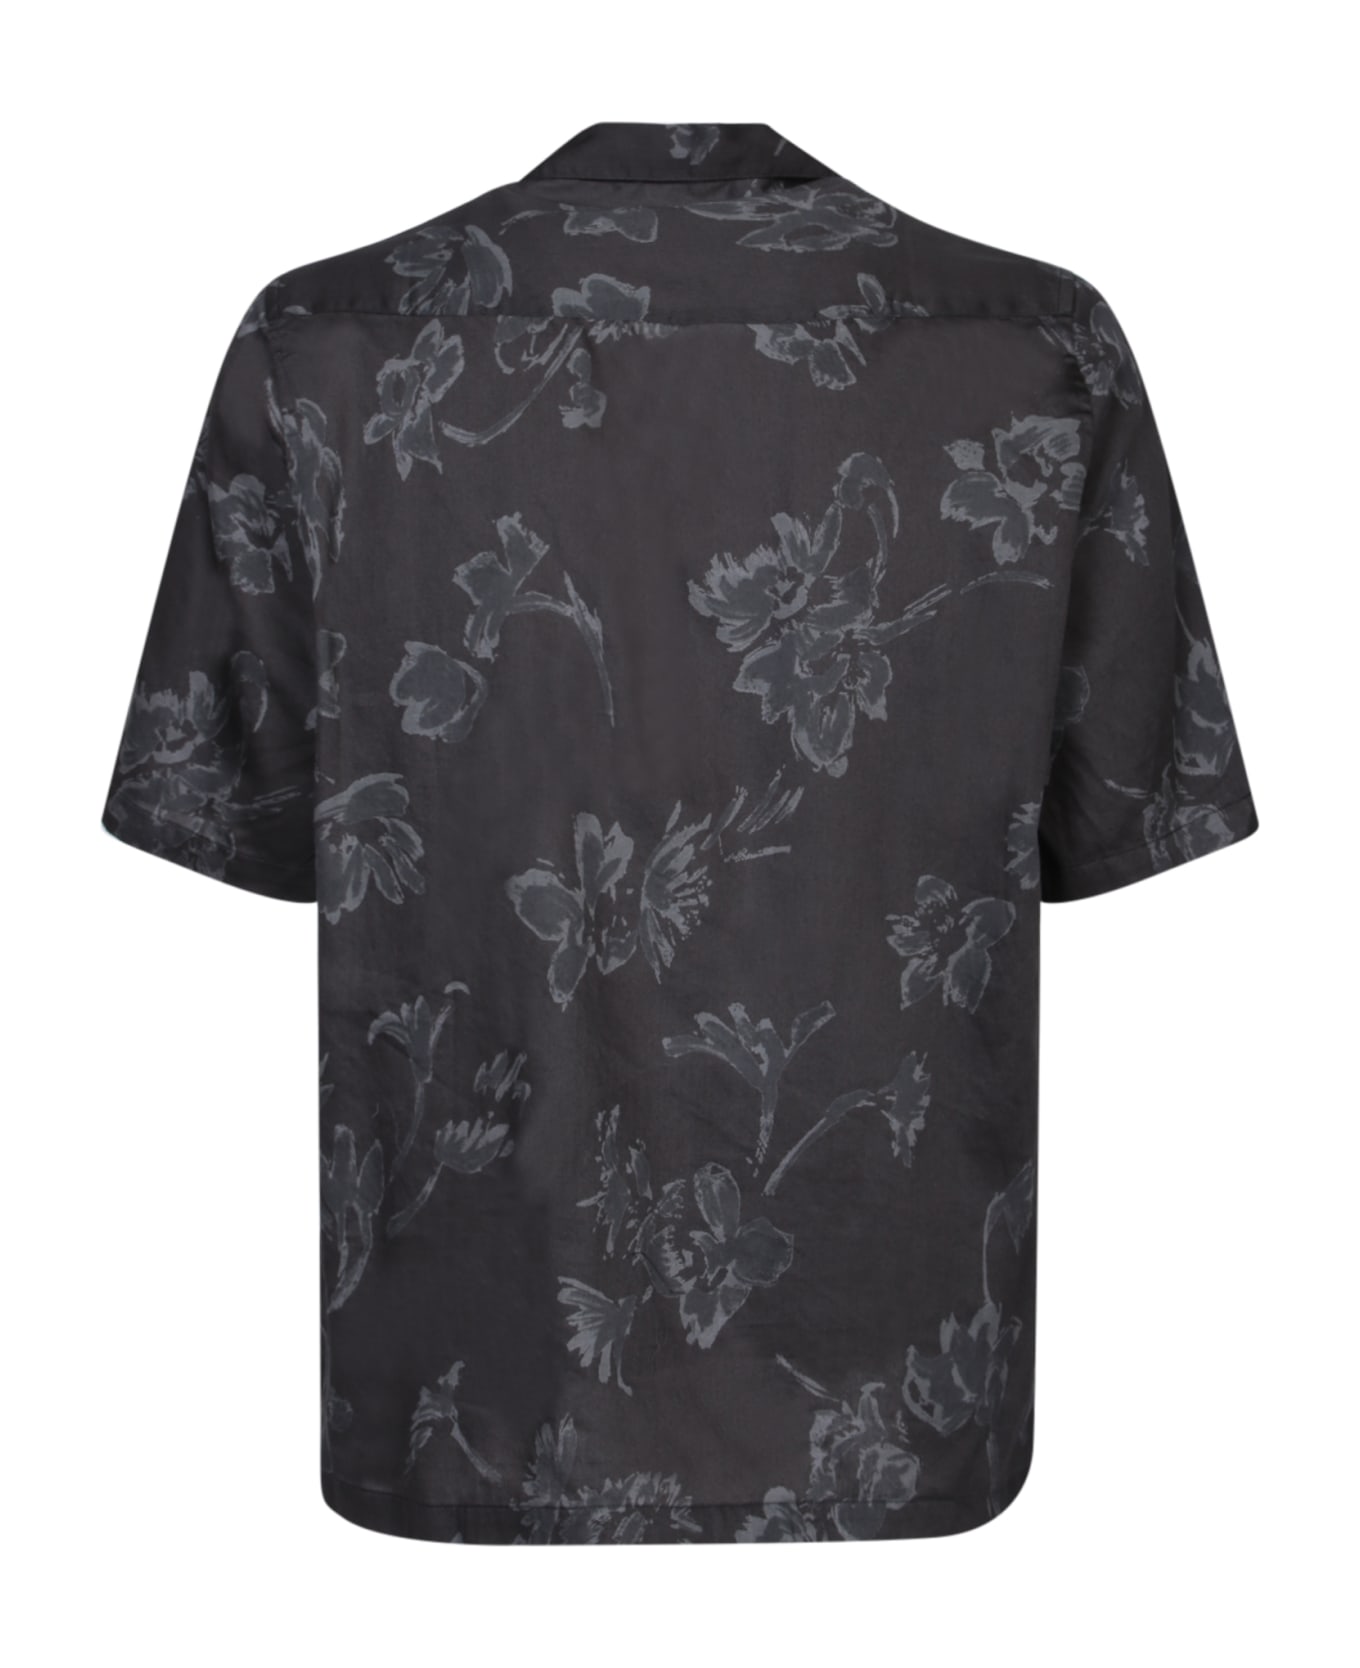 Officine Générale Short Sleeves Black/grey Shirt - Black シャツ